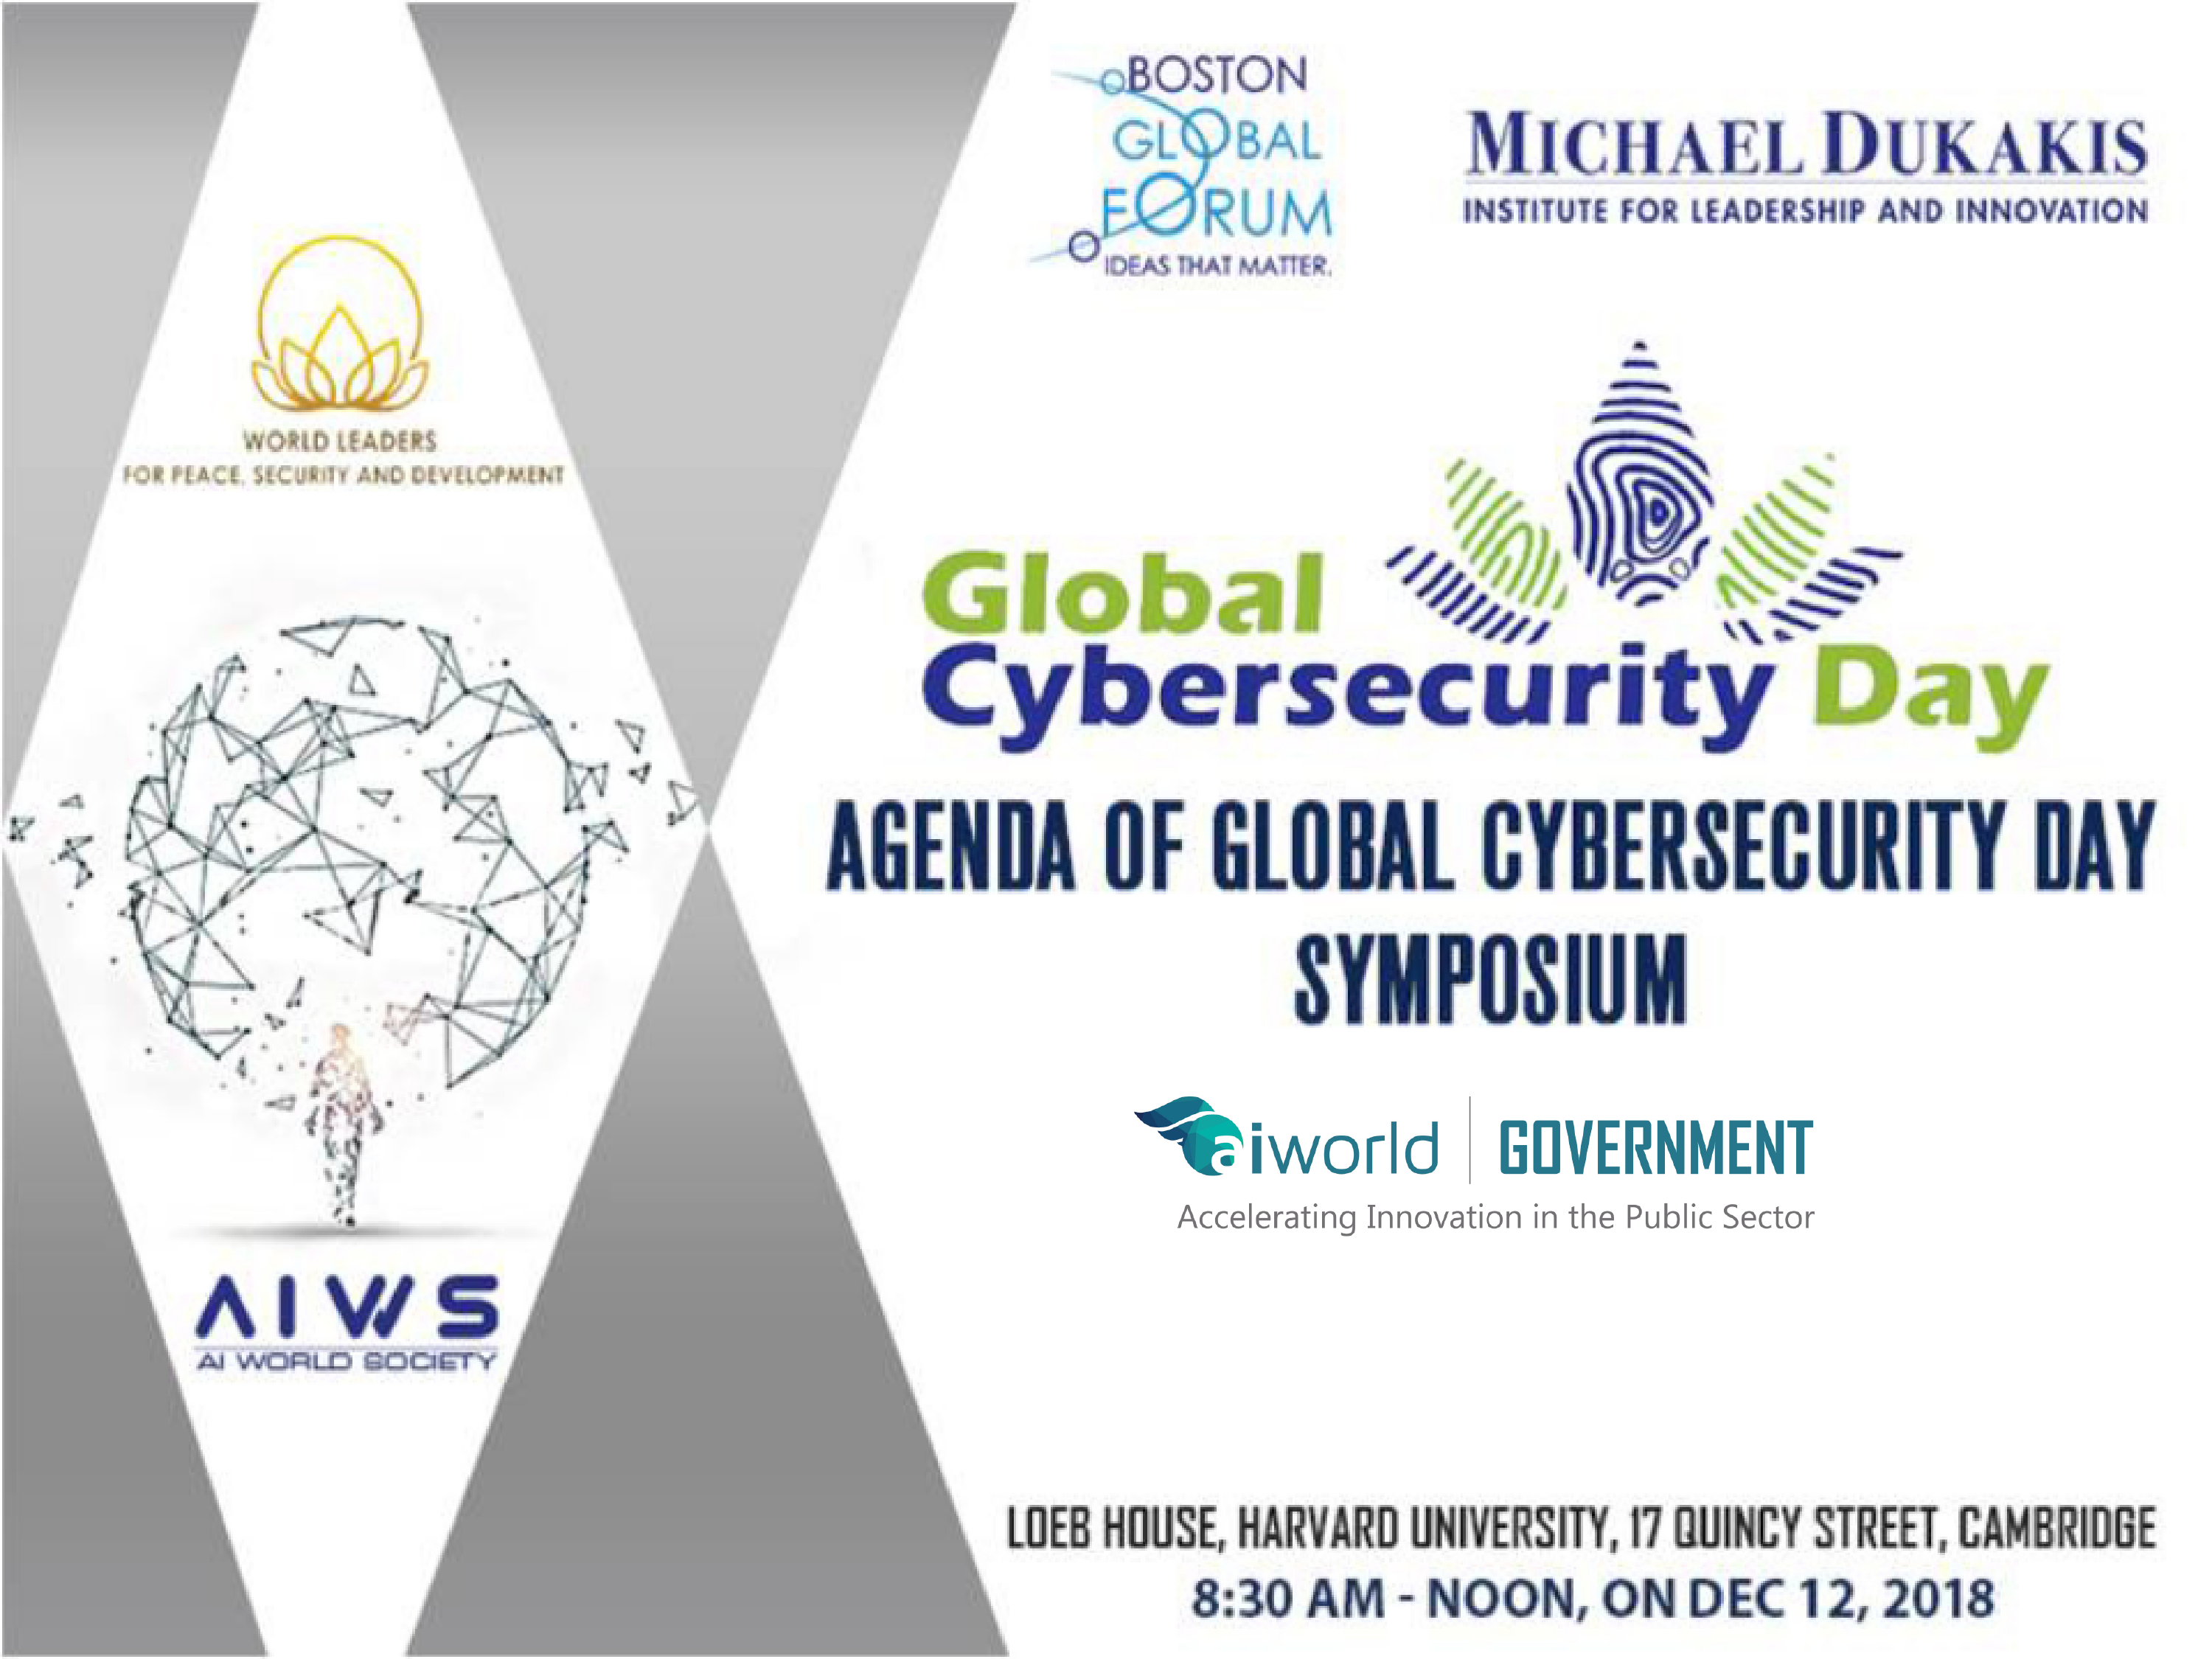 Agenda of Global Cybersecurity Day, December 12, 2018 at Harvard